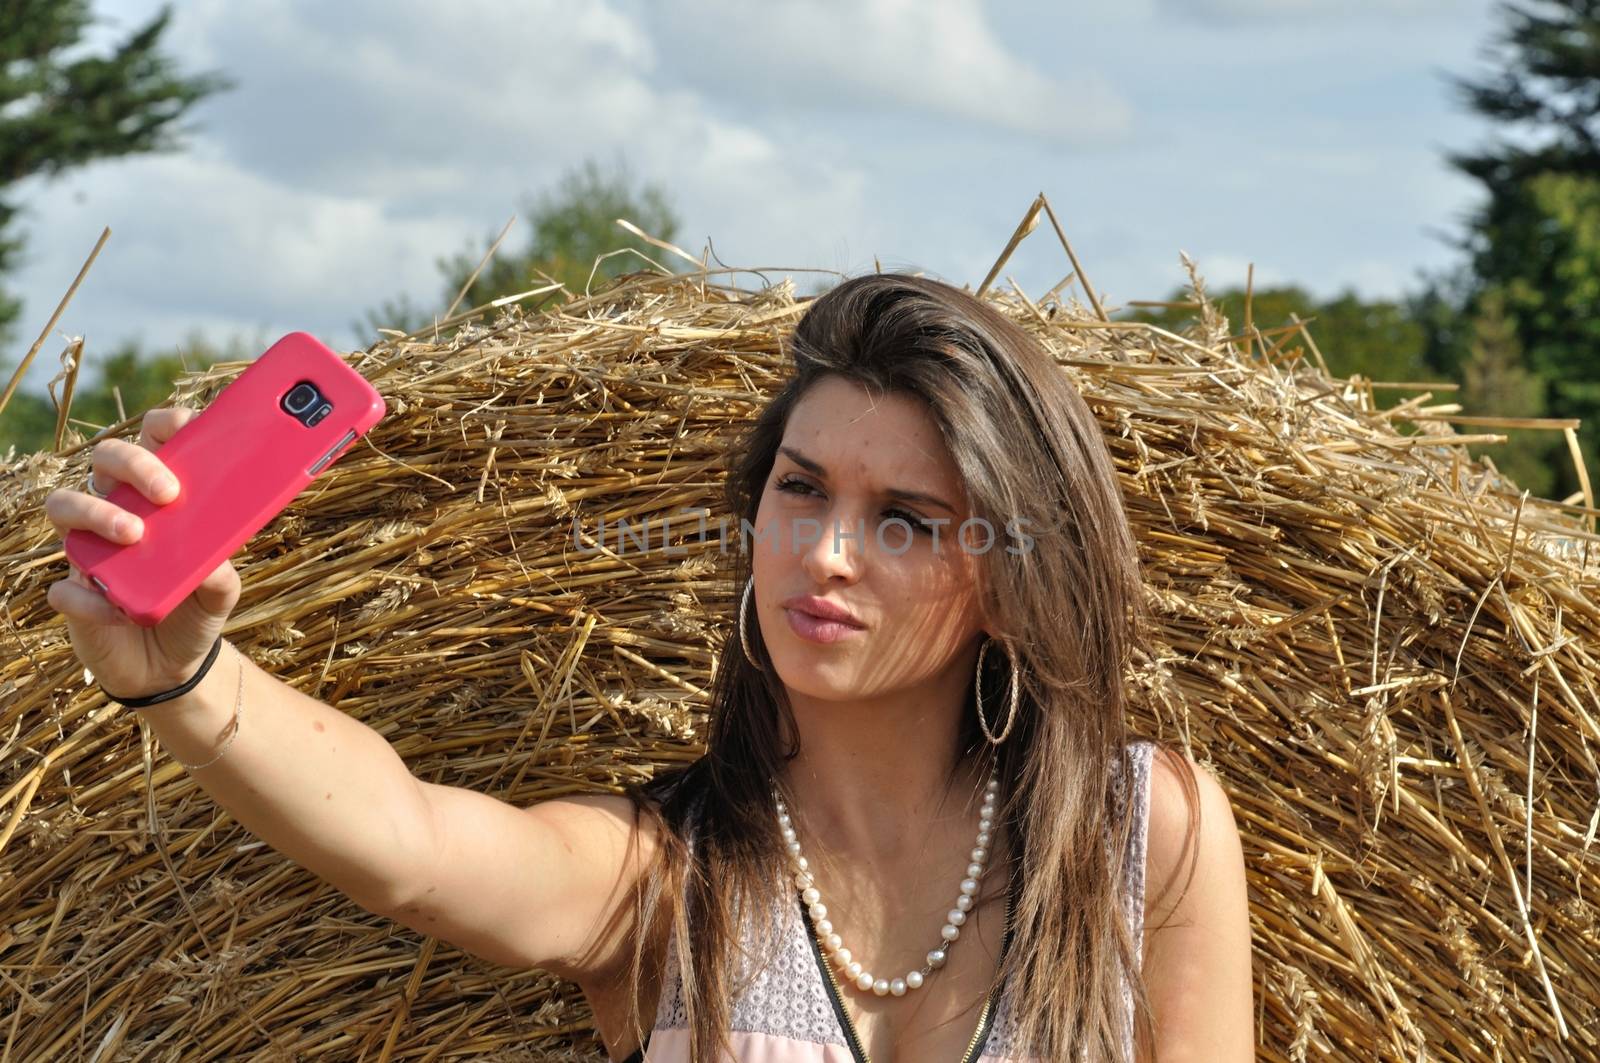 Young woman in field taking a selfie